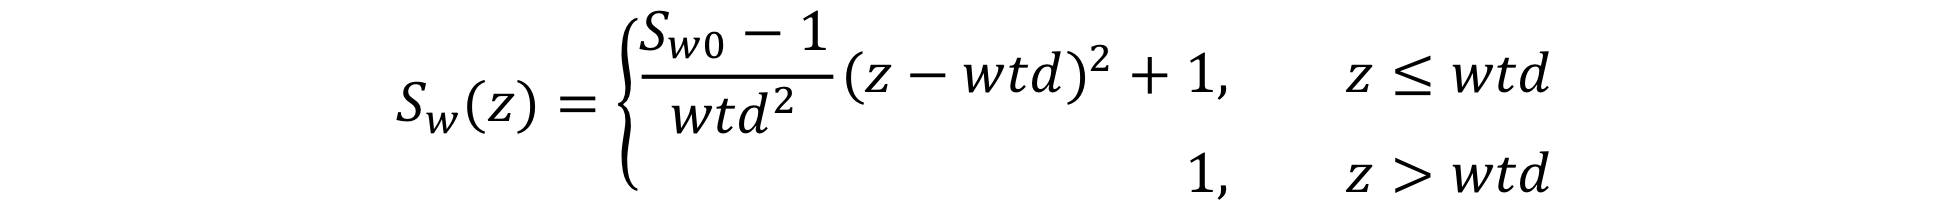 Equation1